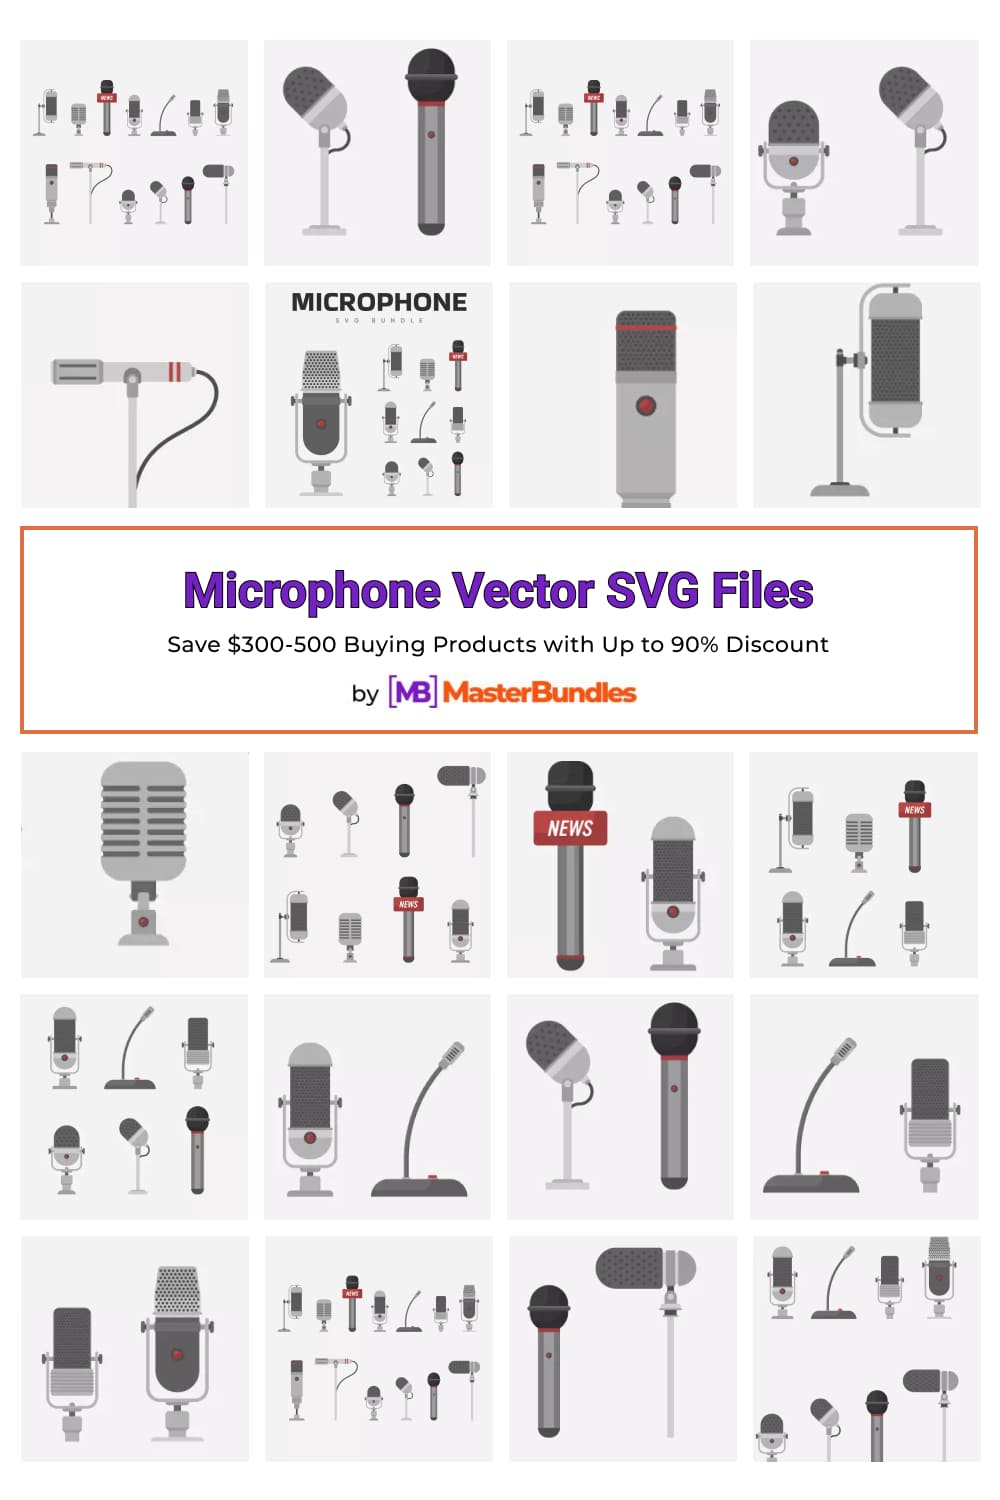 Microphone Vector SVG Files Pinterest image.